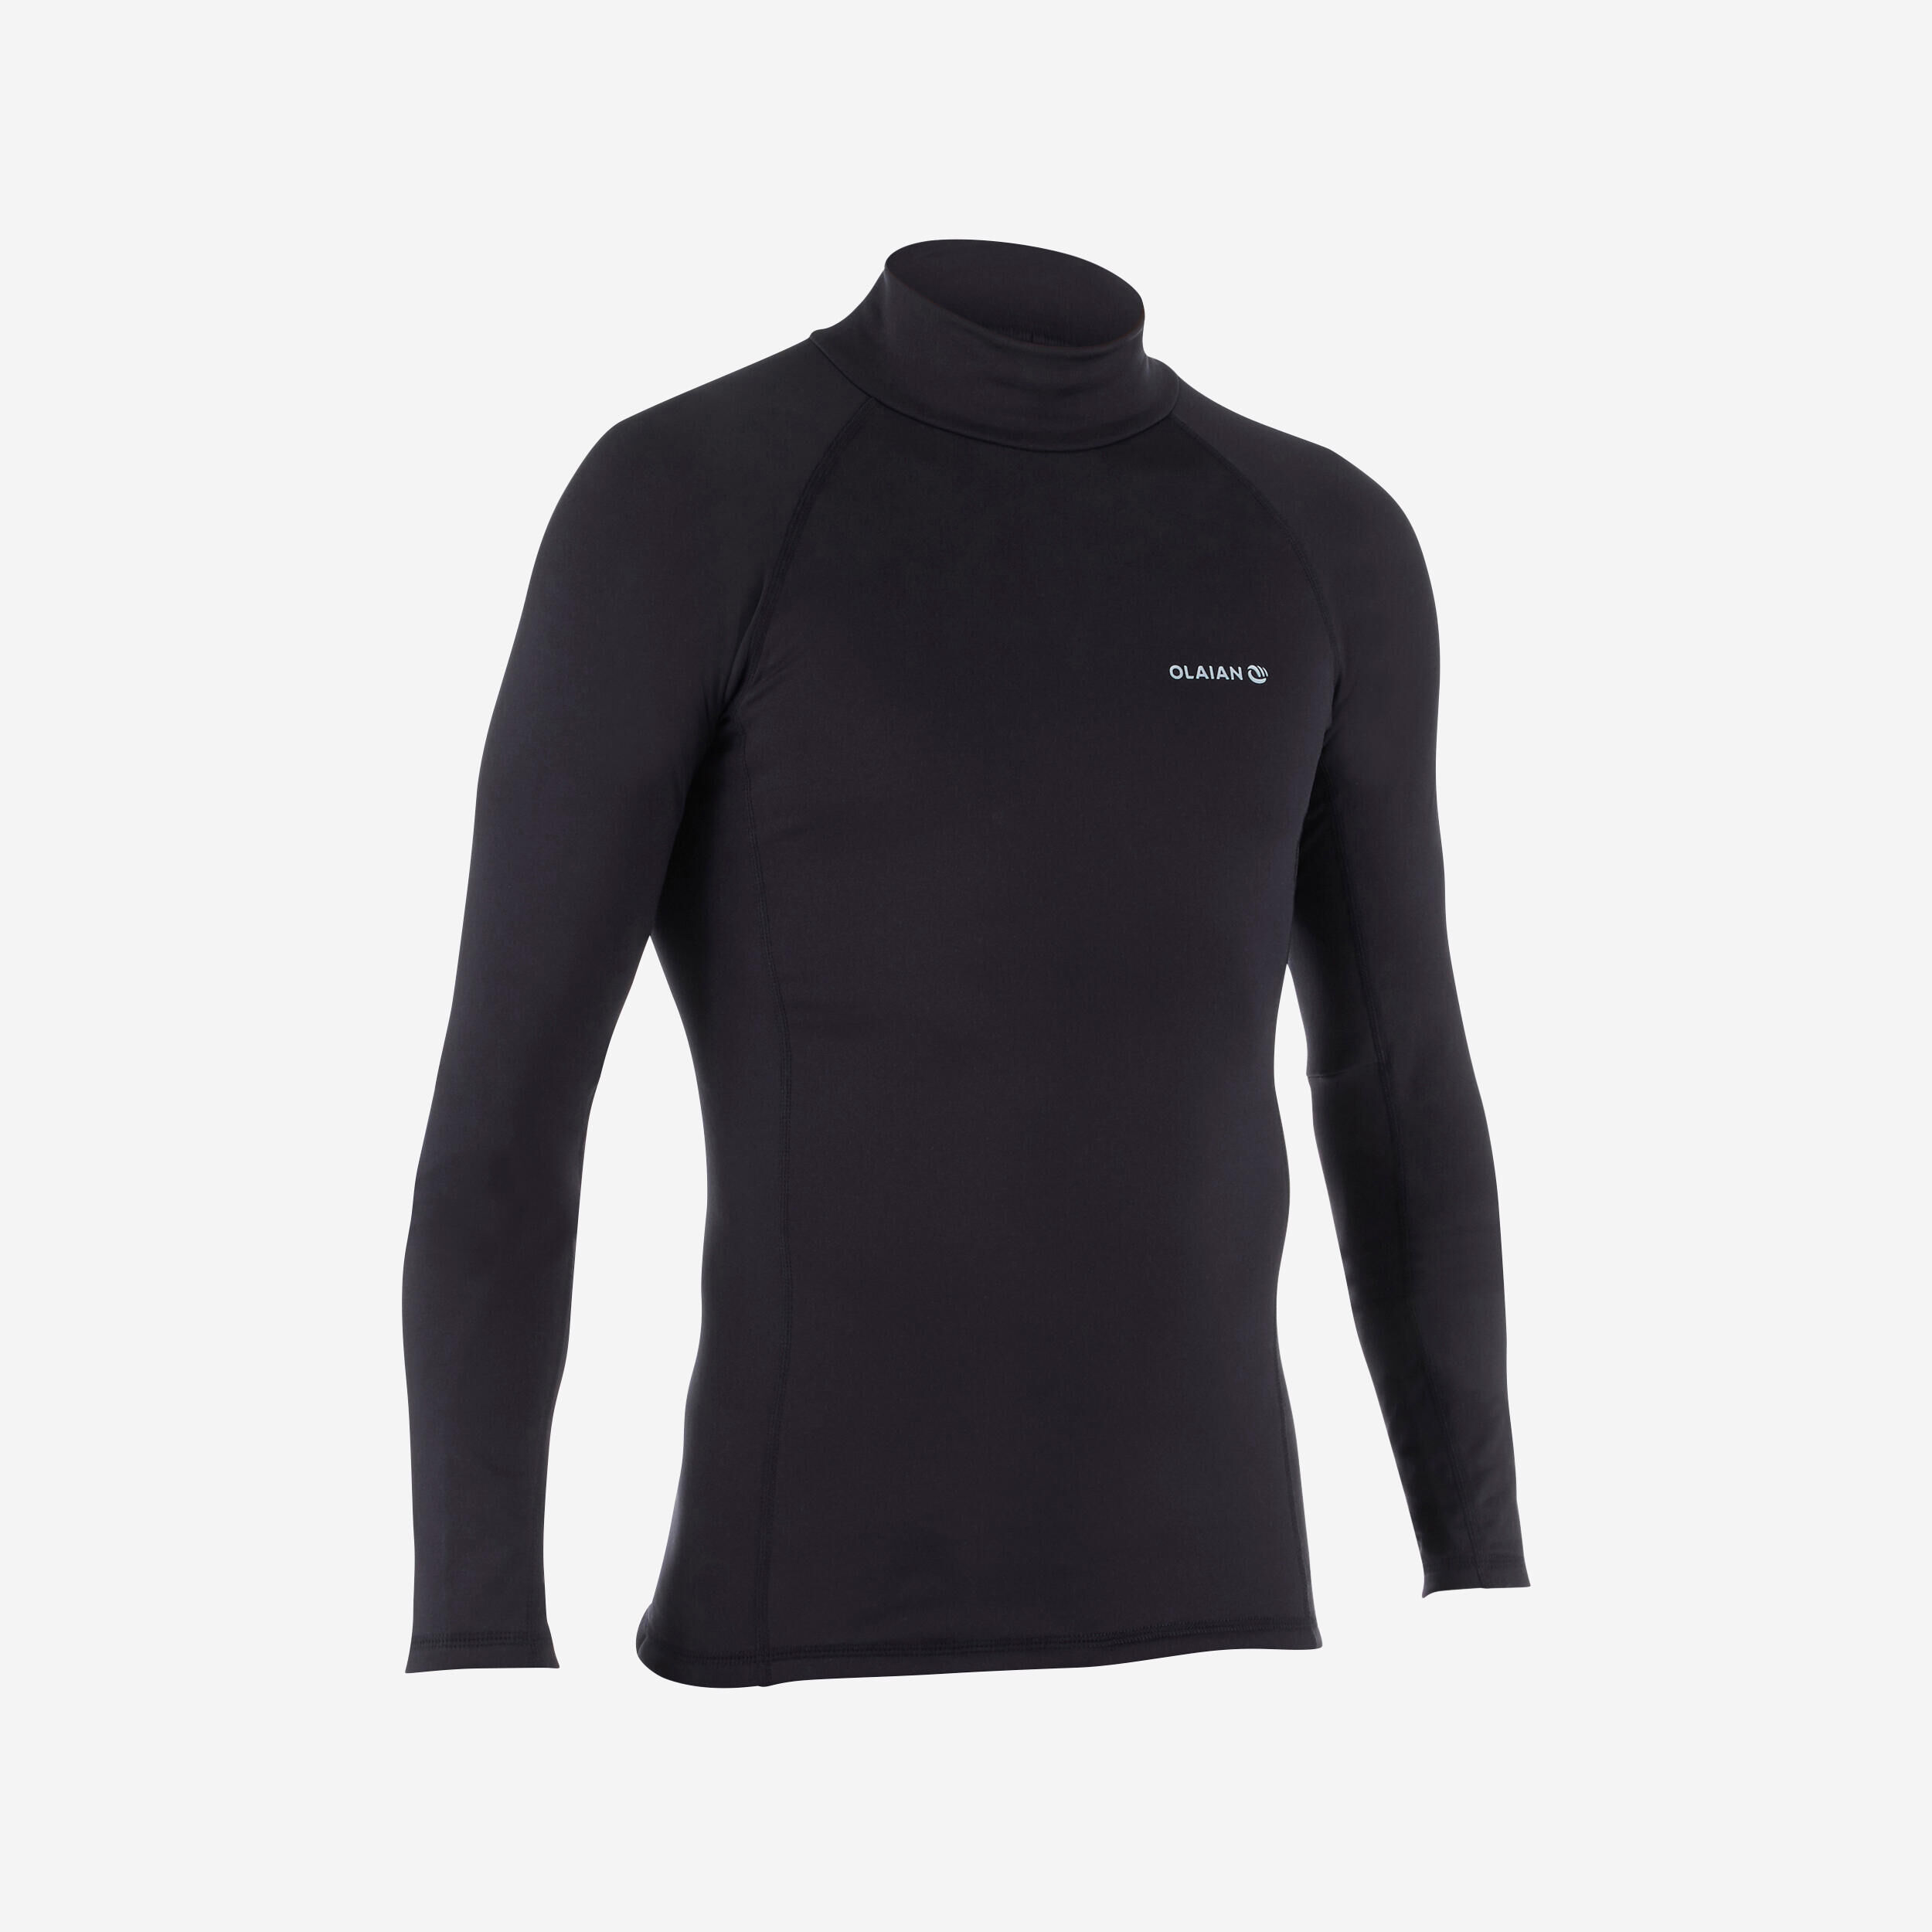 OLAIAN Men's surfing long-sleeve thermal fleece top T-shirt 900 - Black